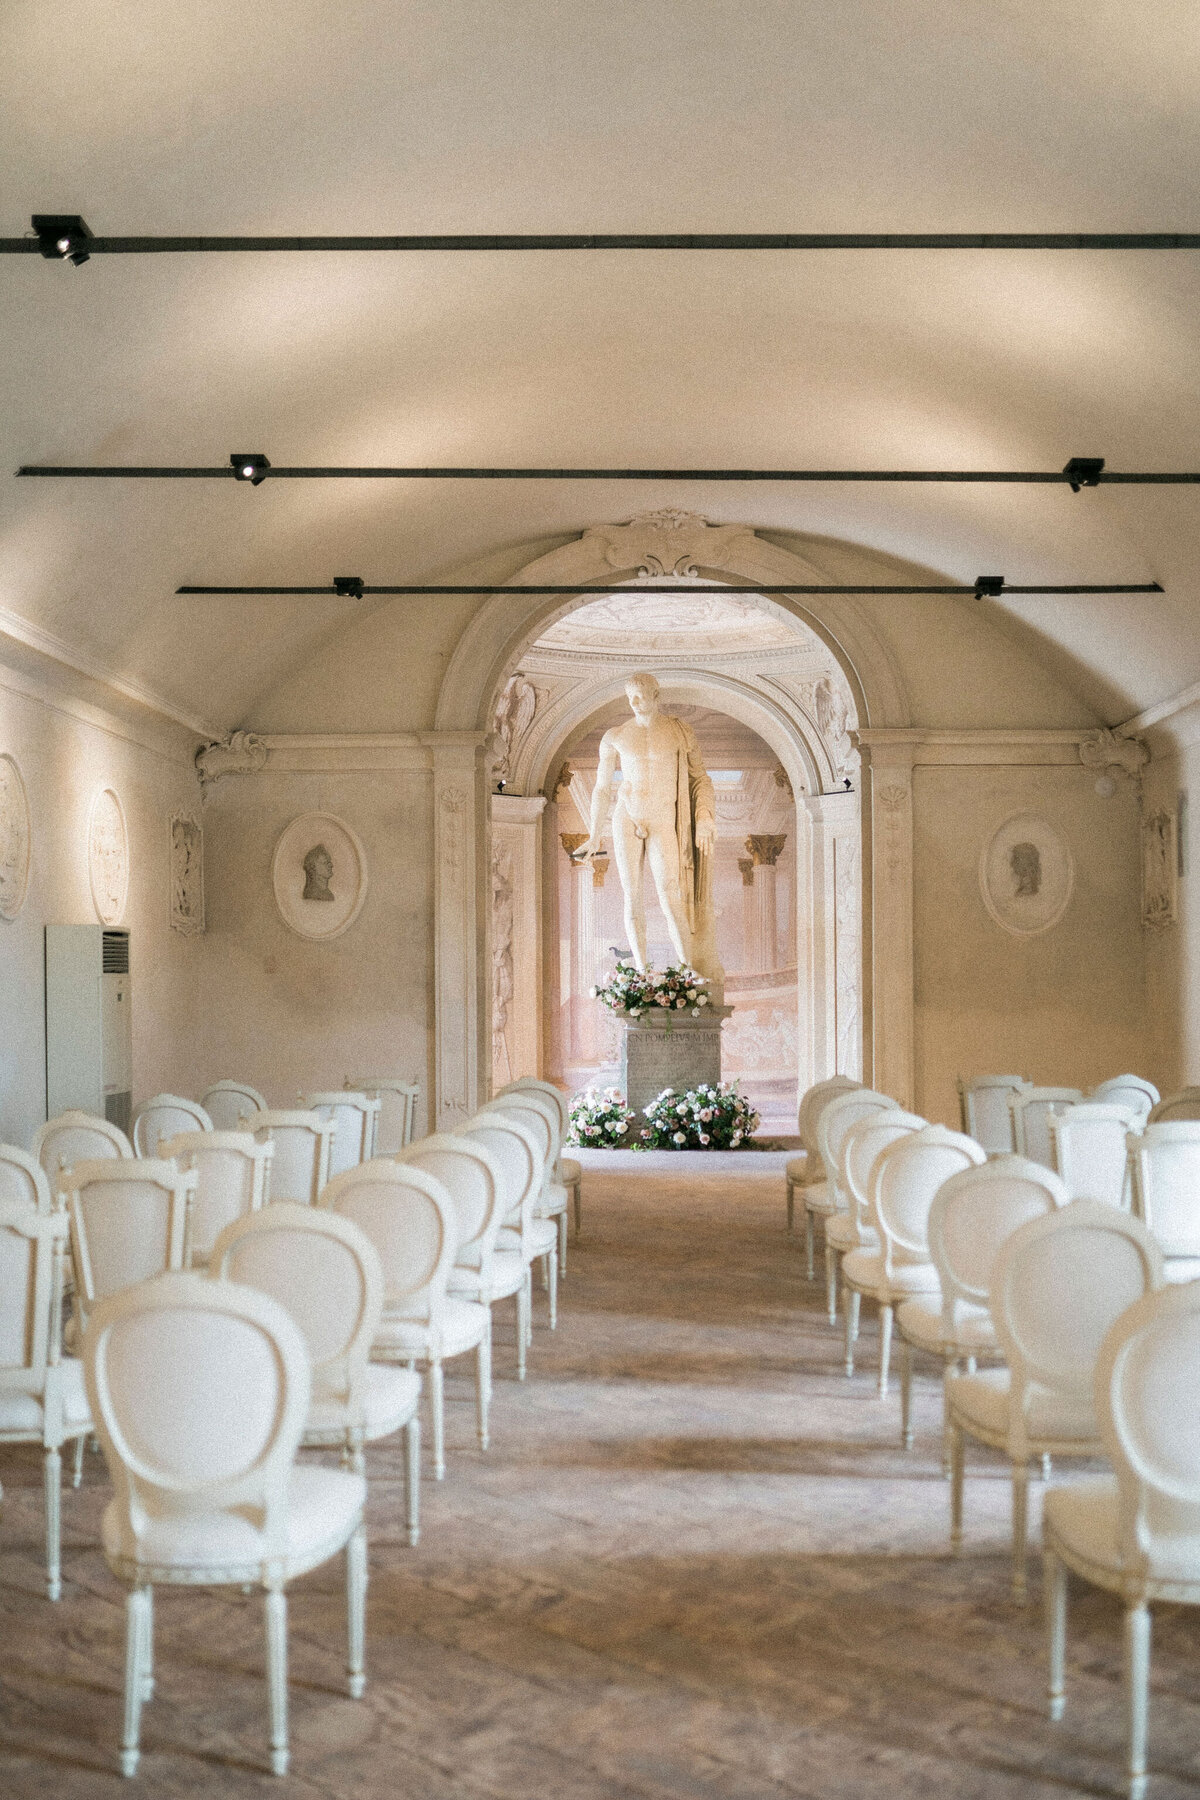 009-Villa-Arconati-Milan-Italy-Cinematic-Romance-Destination-Weddingl-Editorial-Luxury-Fine-Art-Lisa-Vigliotta-Photography